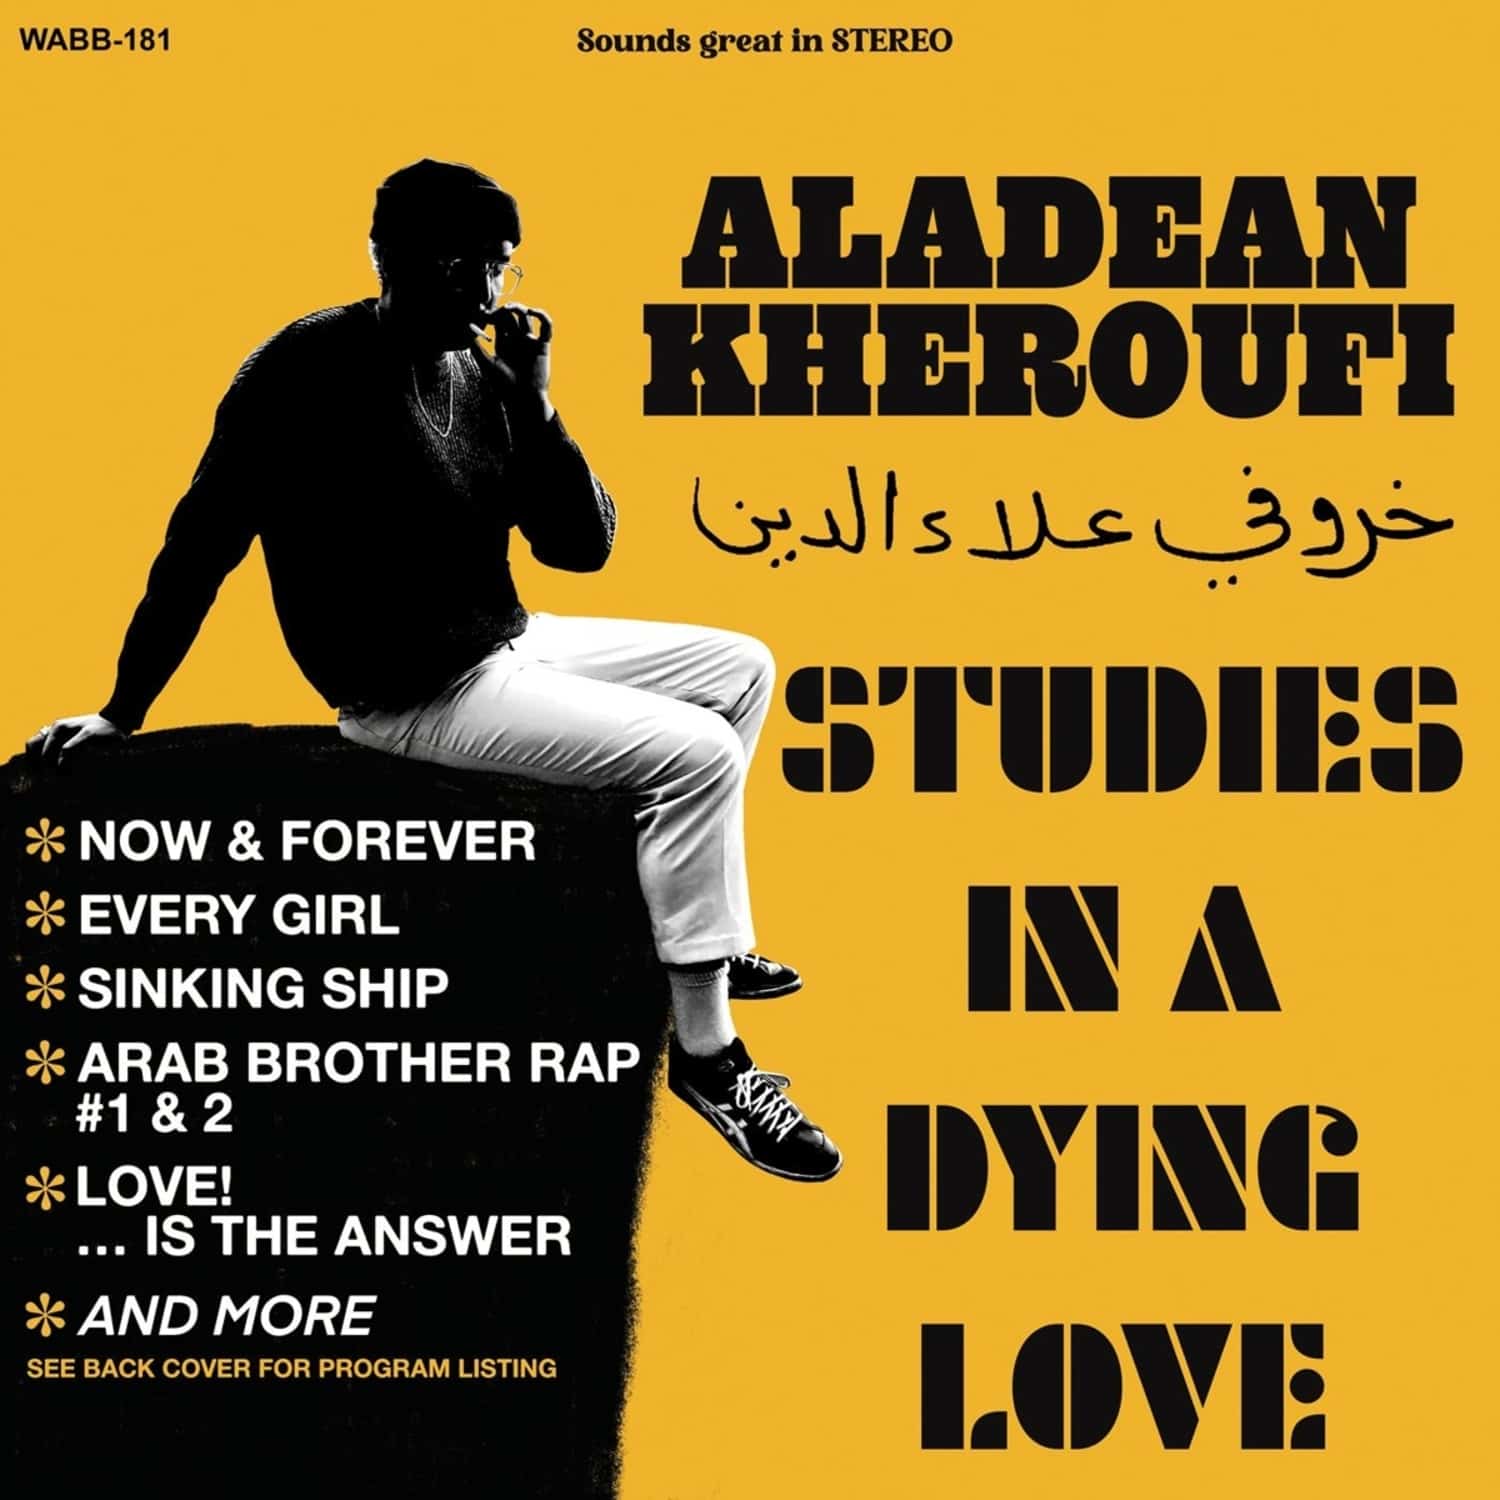 Aladean Kheroufi - STUDIES IN A DYING LOVE 